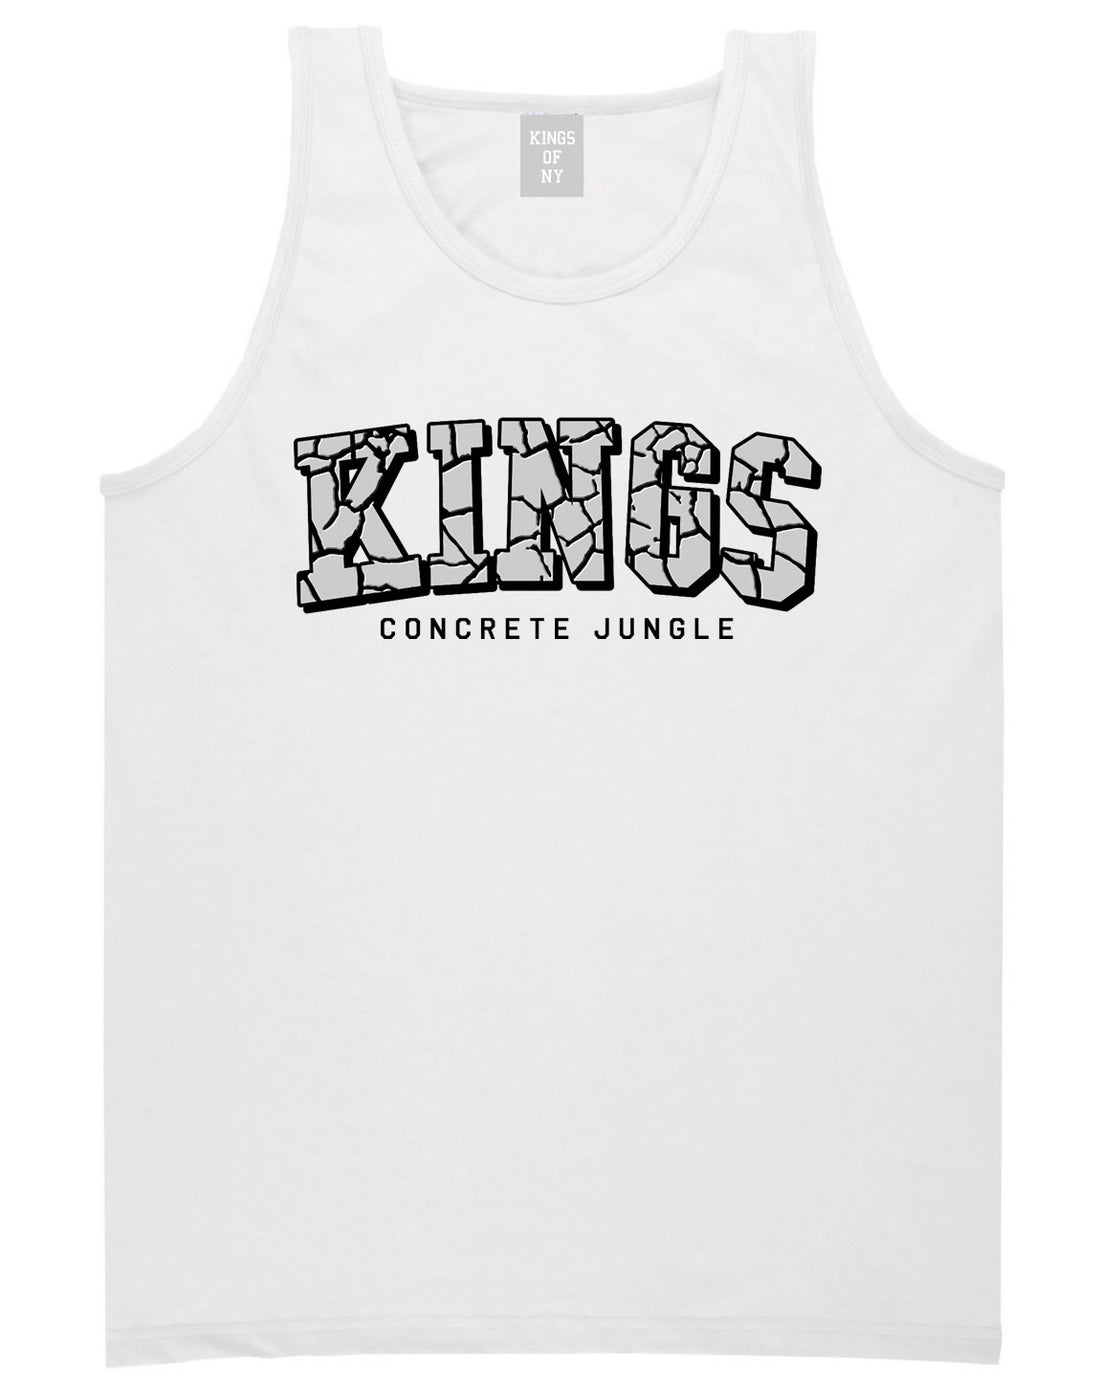 KINGS Conrete Jungle Mens Tank Top Shirt White